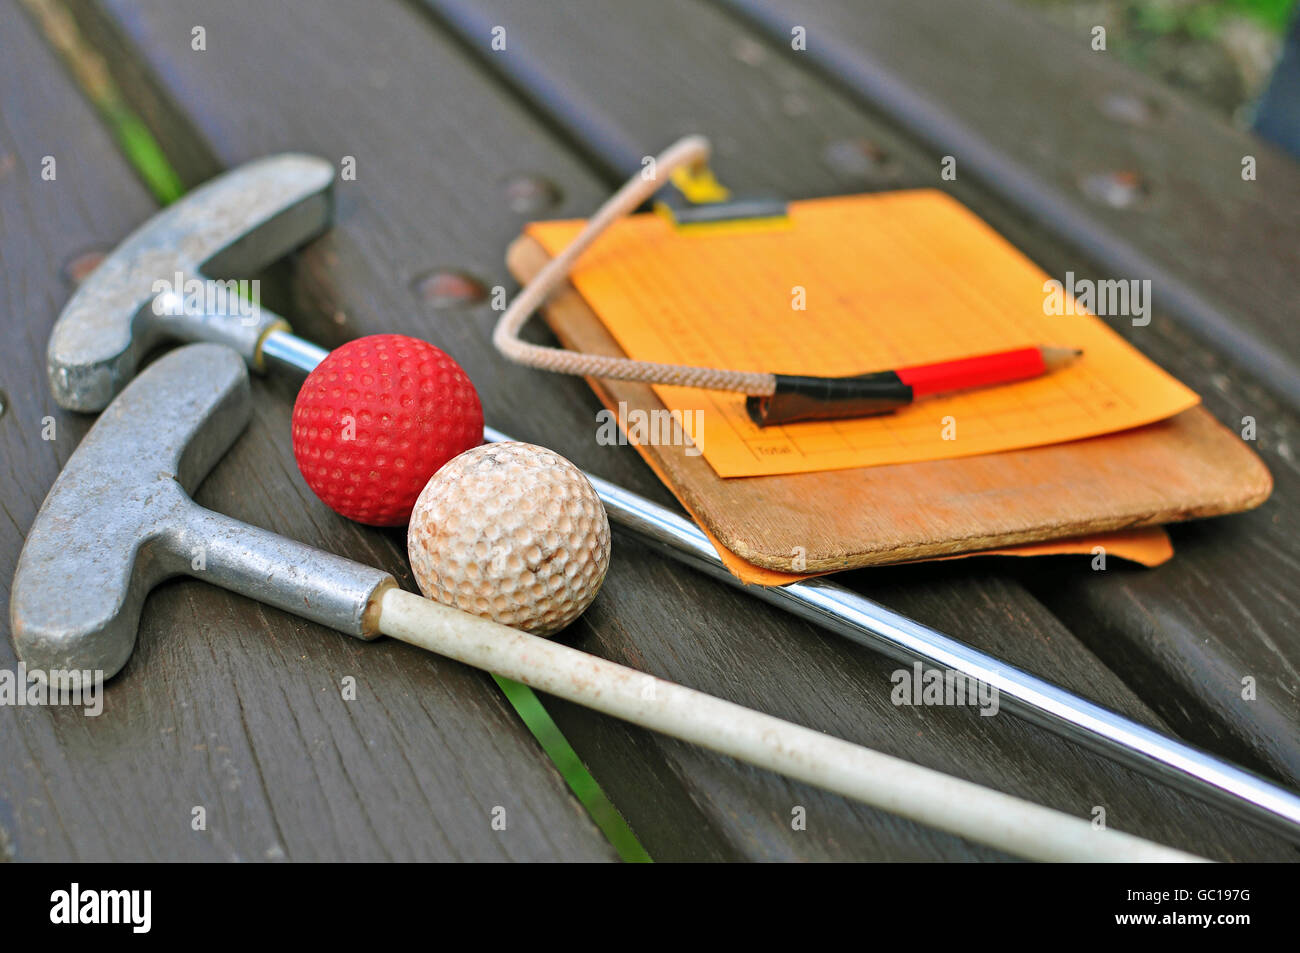 Mini golf equipment Stock Photo